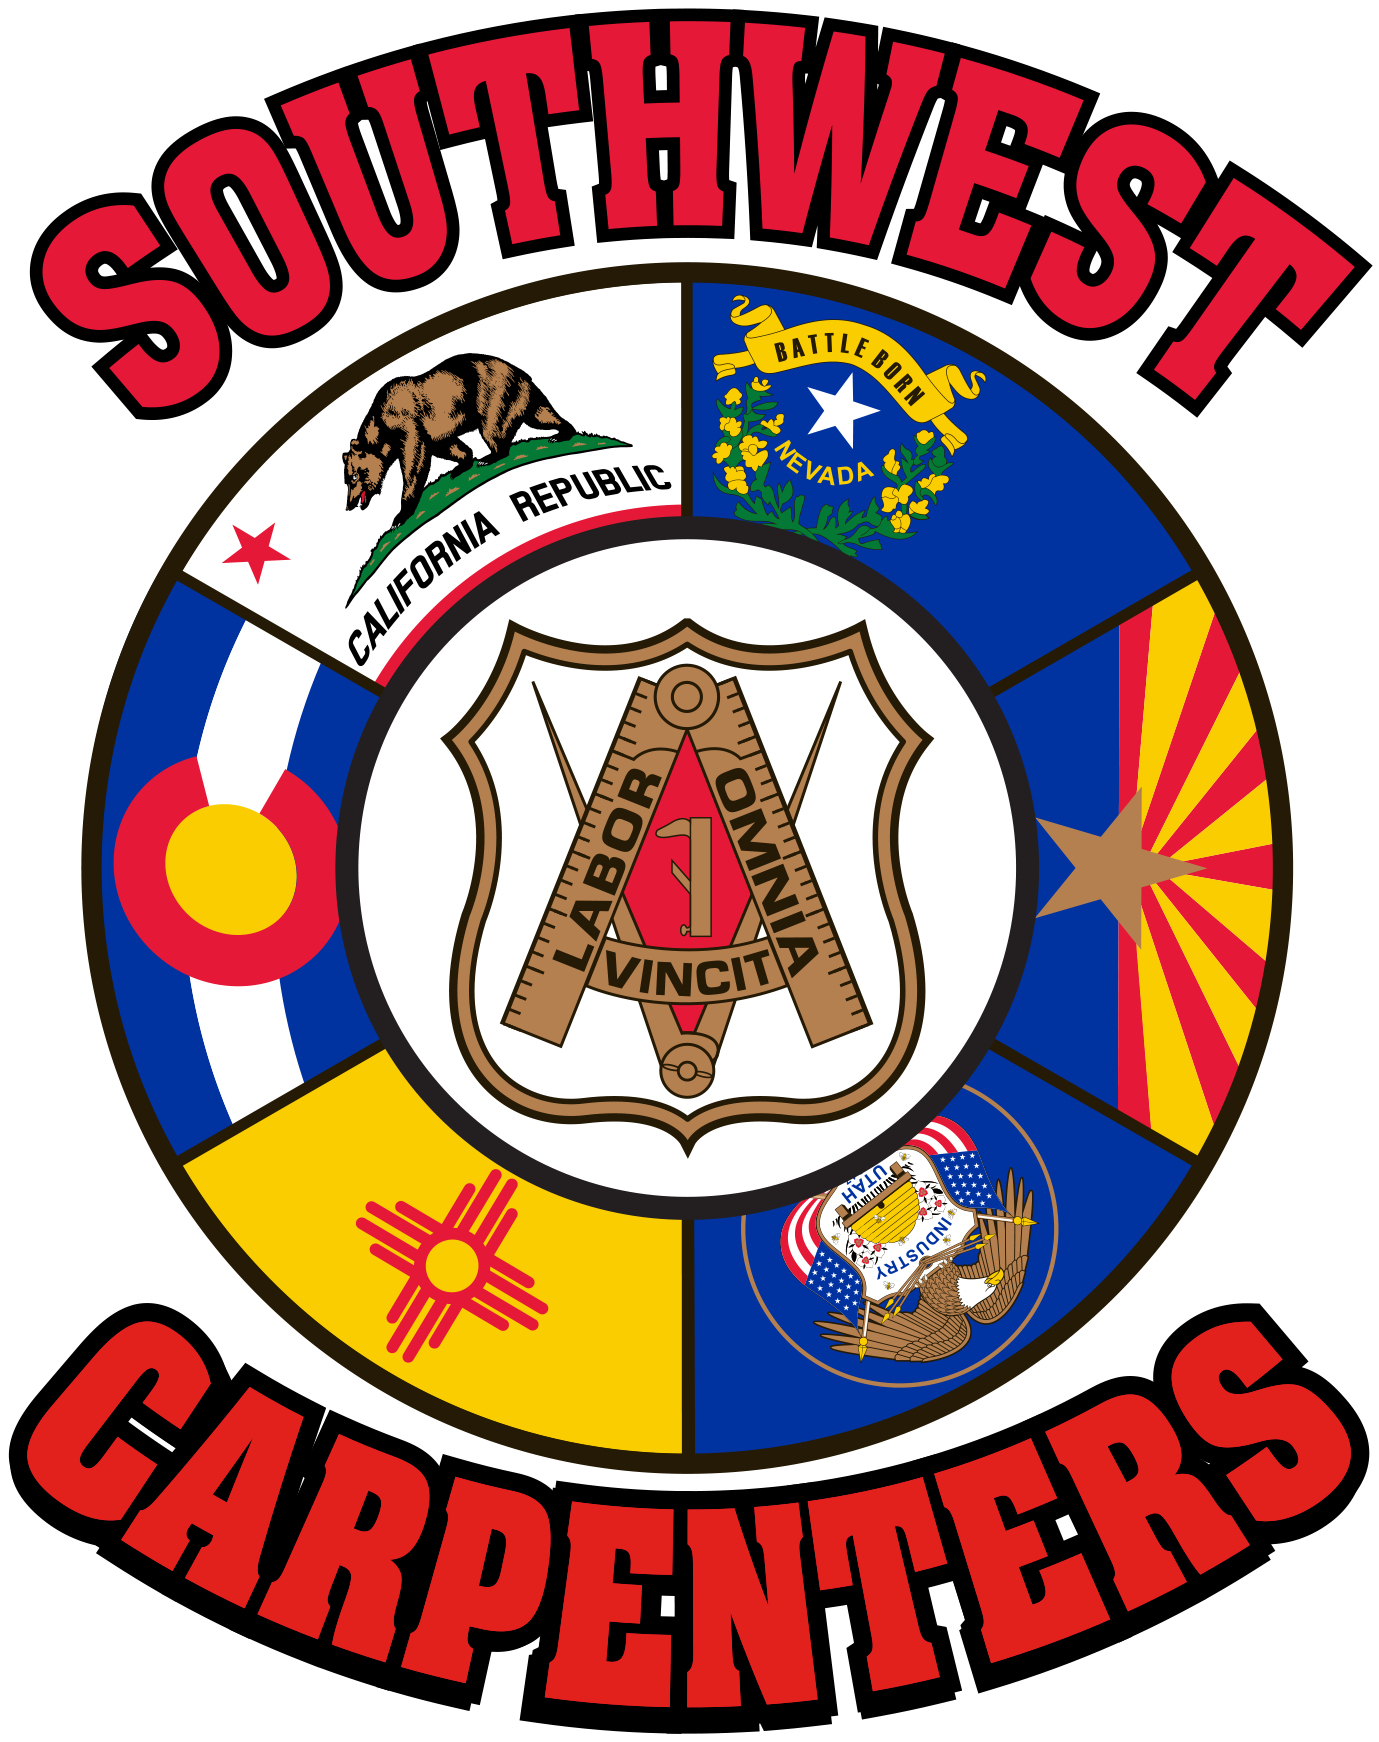 Carpenters SWRC logo.new.2016 v2.png